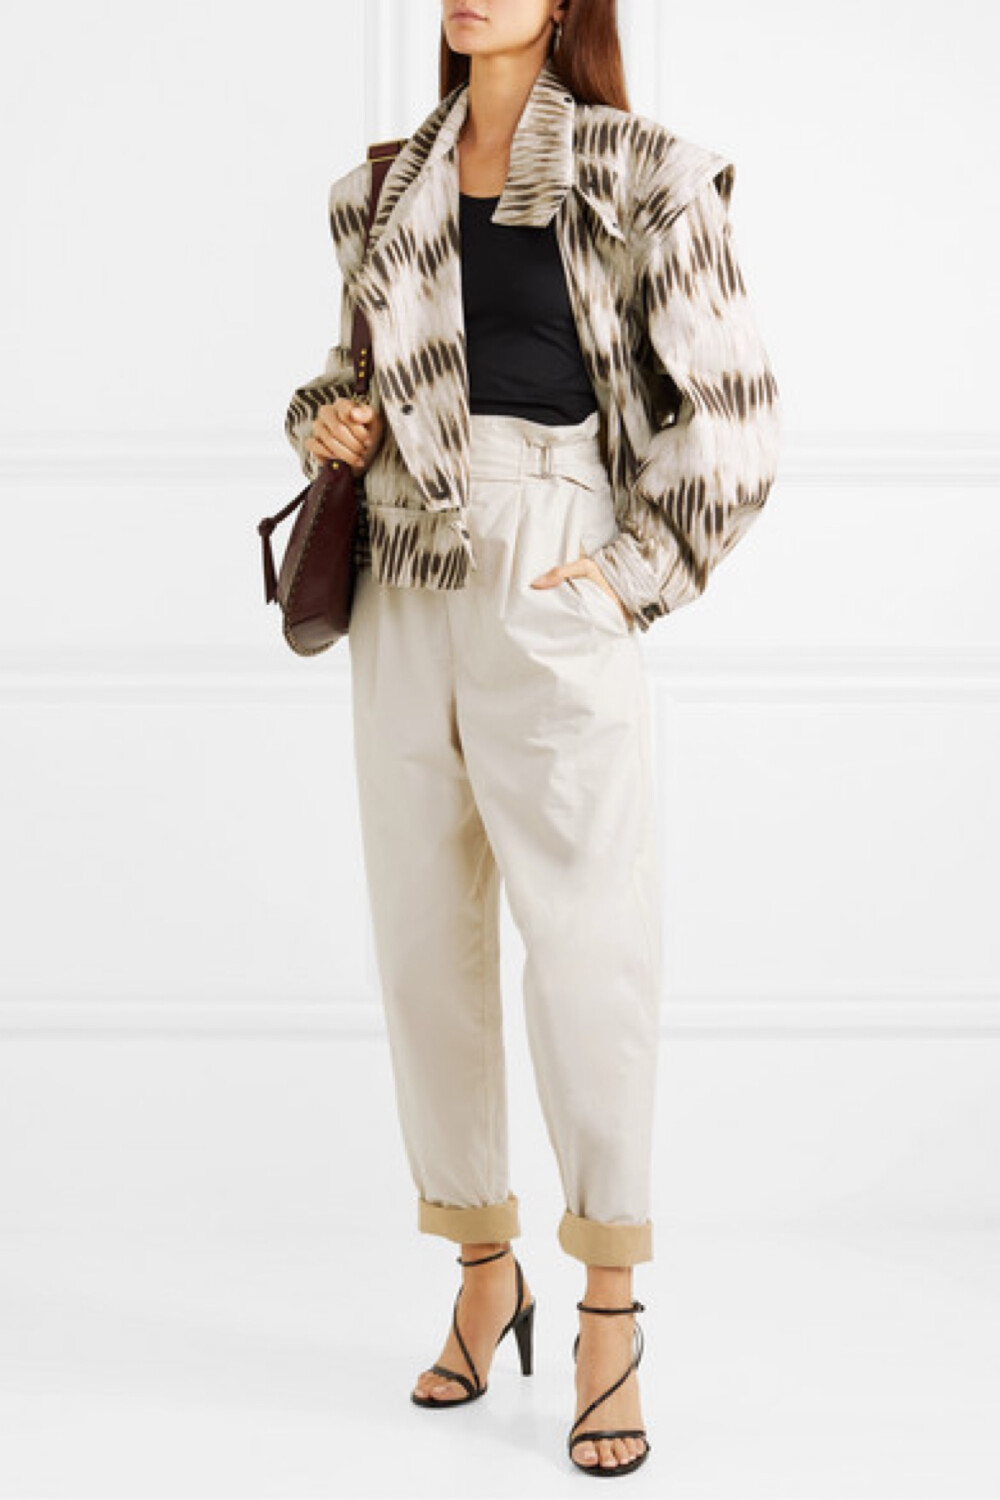 Isabel Marant 2019 秋冬系列将品牌标志性的游牧风设计转进都市游猎题材，将典雅的大地色系与夸张的实用风廓形完美结合。这款 “Idaline” 直筒夹克裁自硬挺的牛仔布，配有可调整松紧的腰间袢带。单品还可卸下双袖，变身马甲款式。不妨与同饰有扎染图案的配套牛仔裤一同穿着。